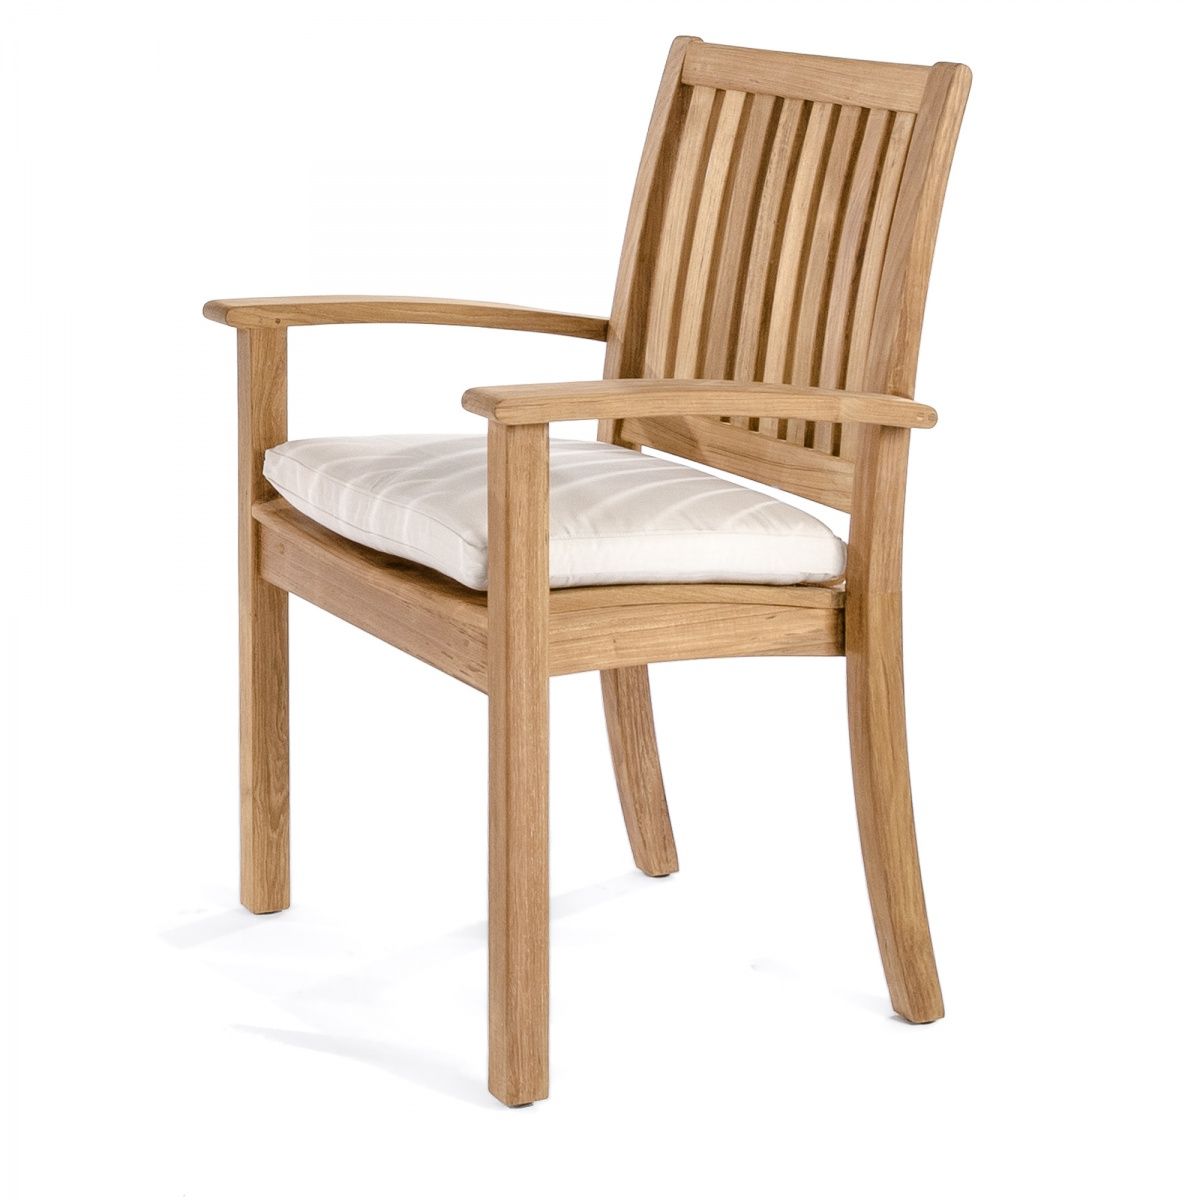 Stacking chairs teak wood